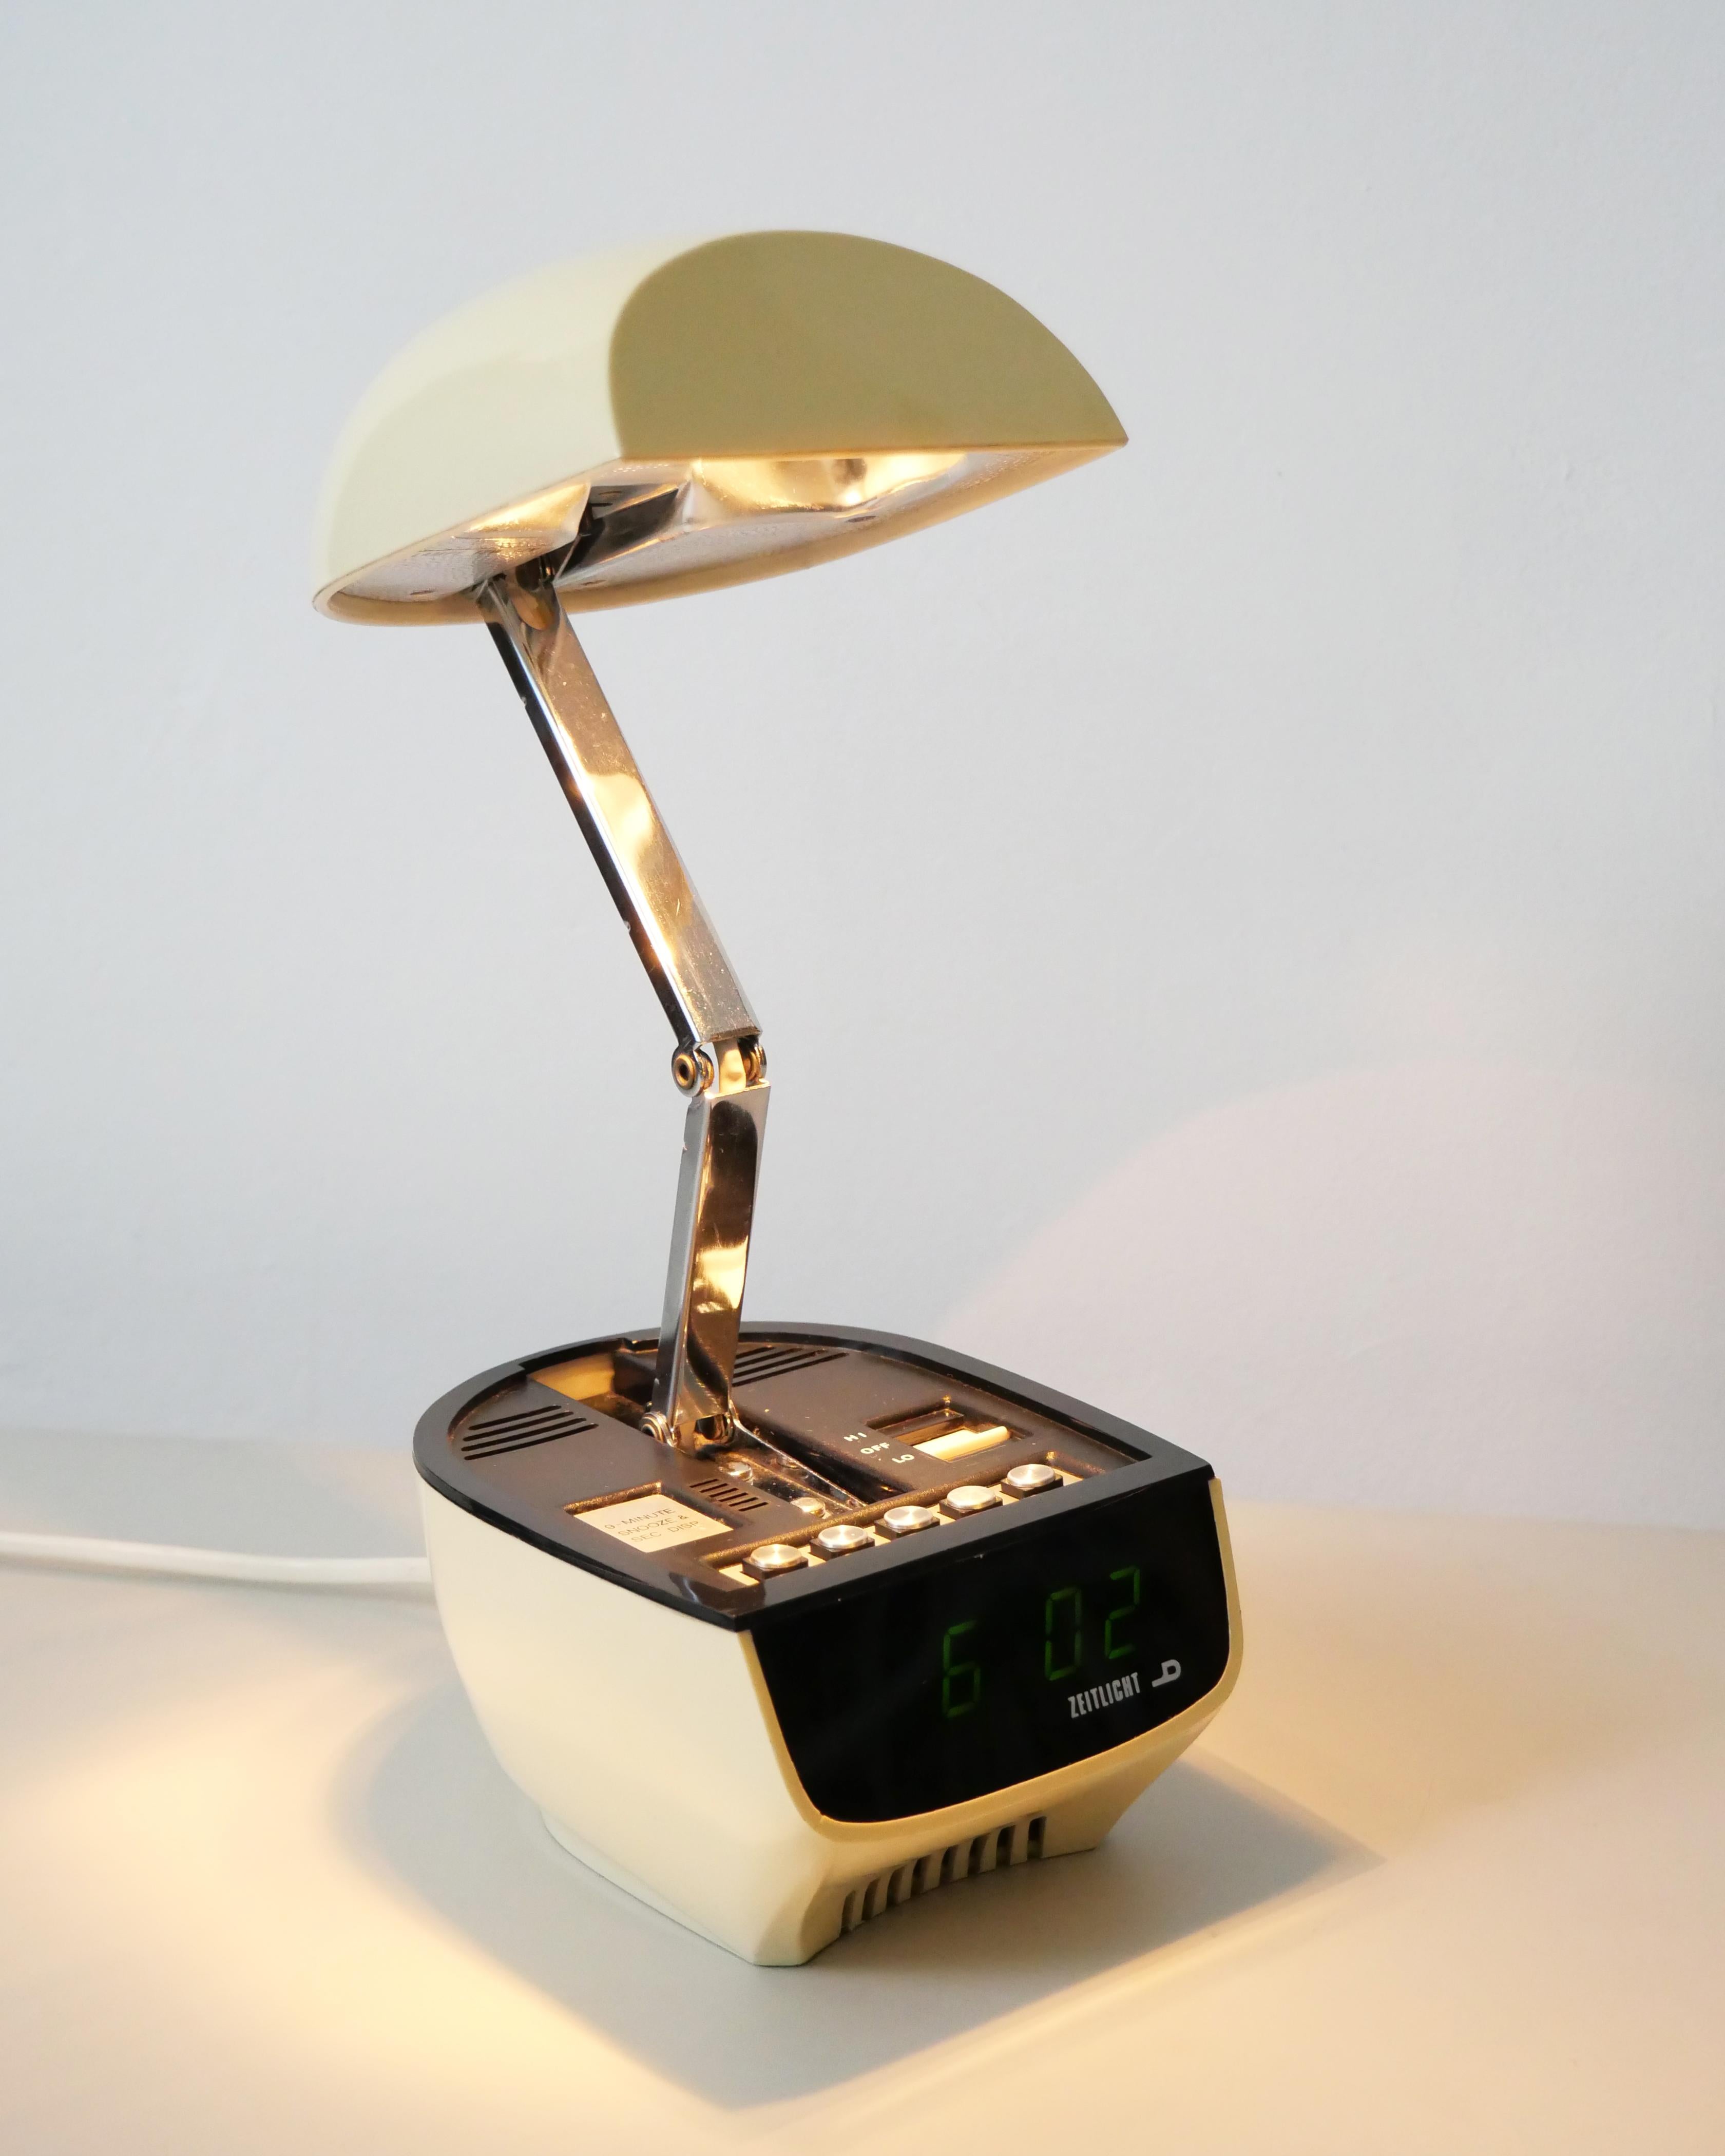 Late 20th Century Zeitlicht Desk/Table/Bedside Lamp Alarm Clock, 1970s Spaceage Colombo Panton Era